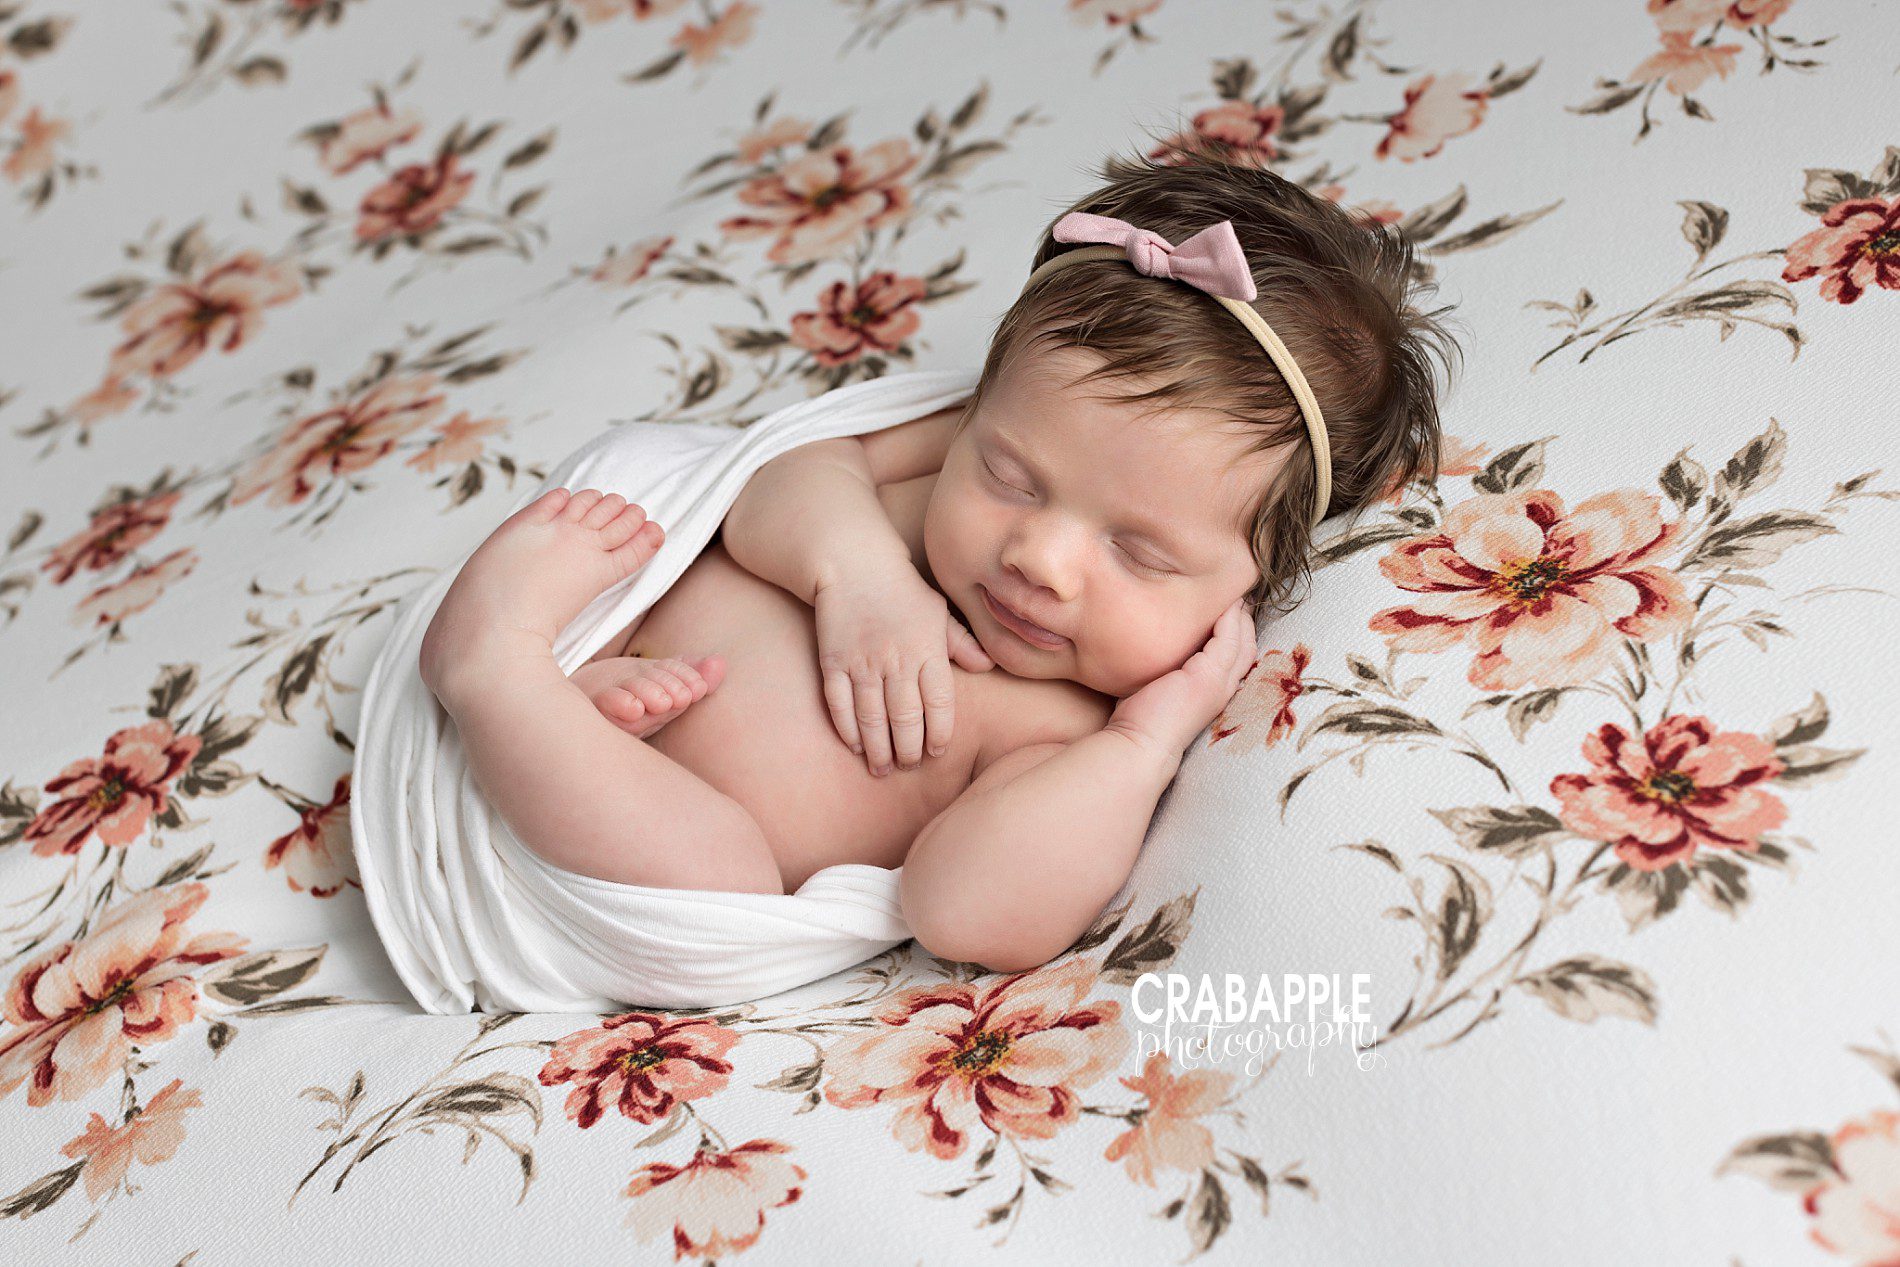 floral newborn photo ideas for girls